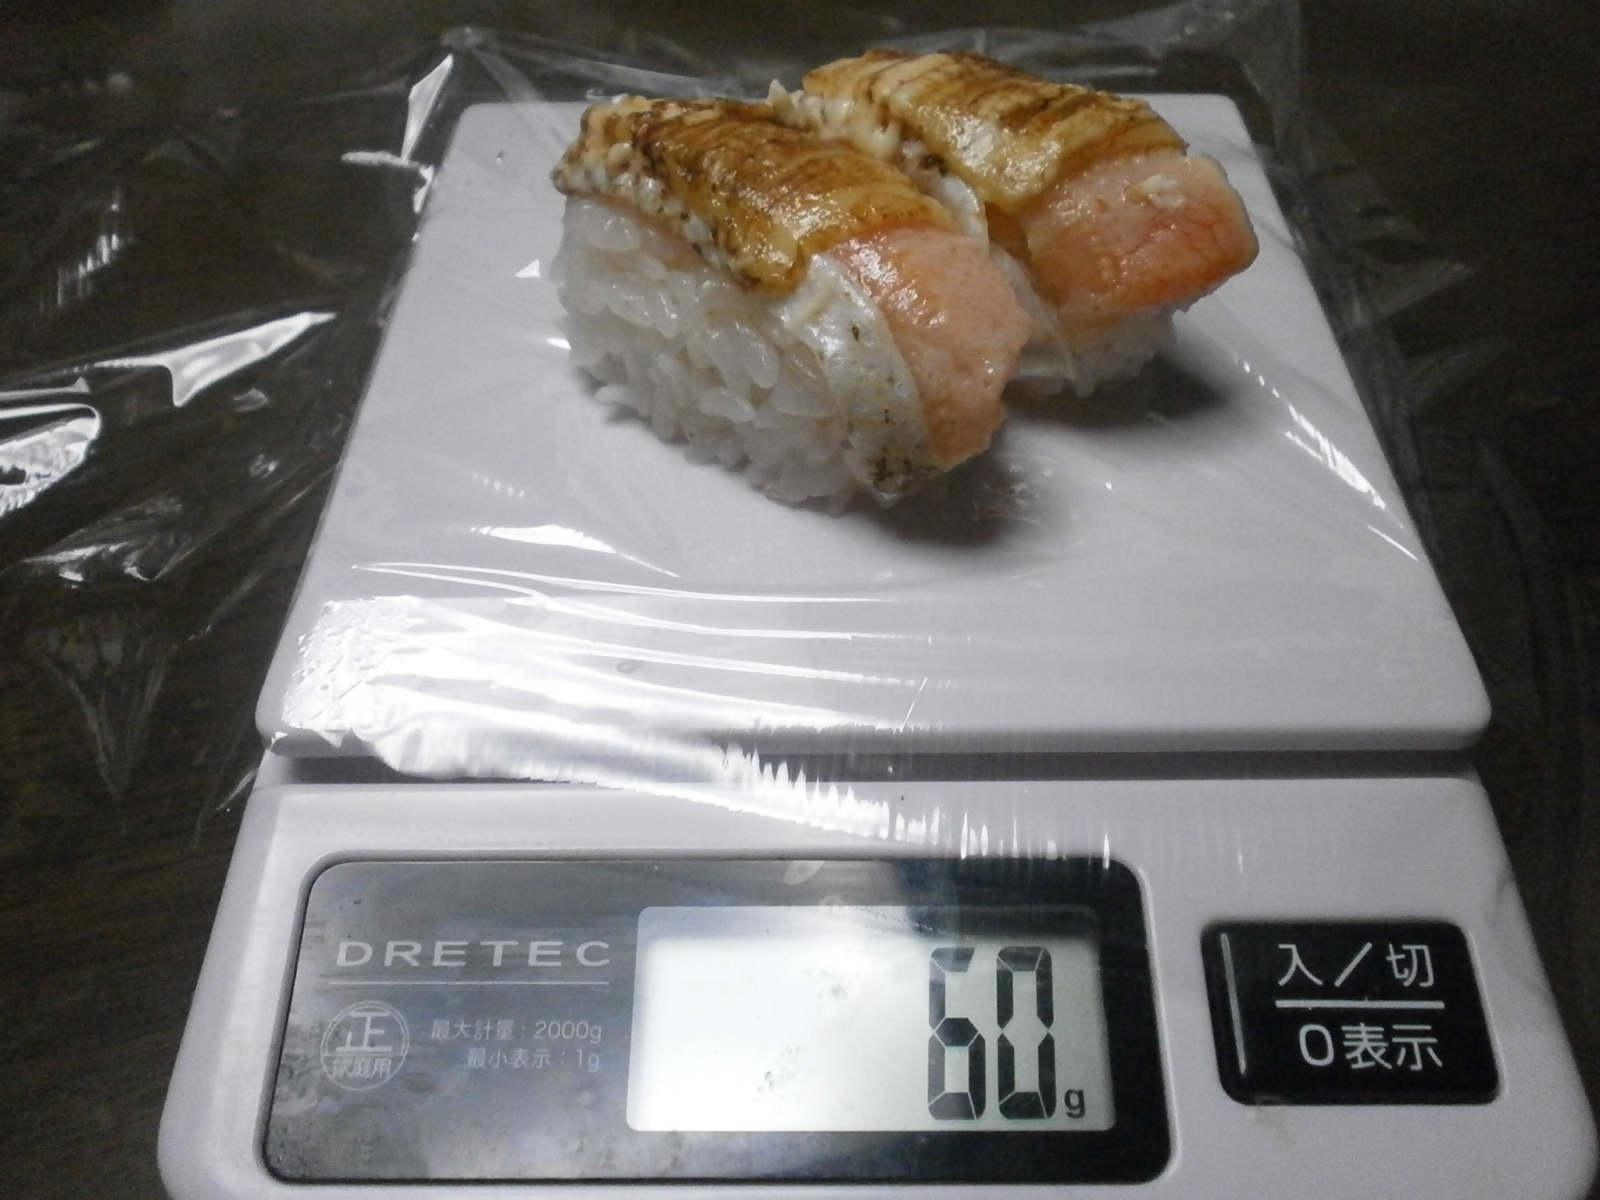 Zu immediately salmon (Sushiro)